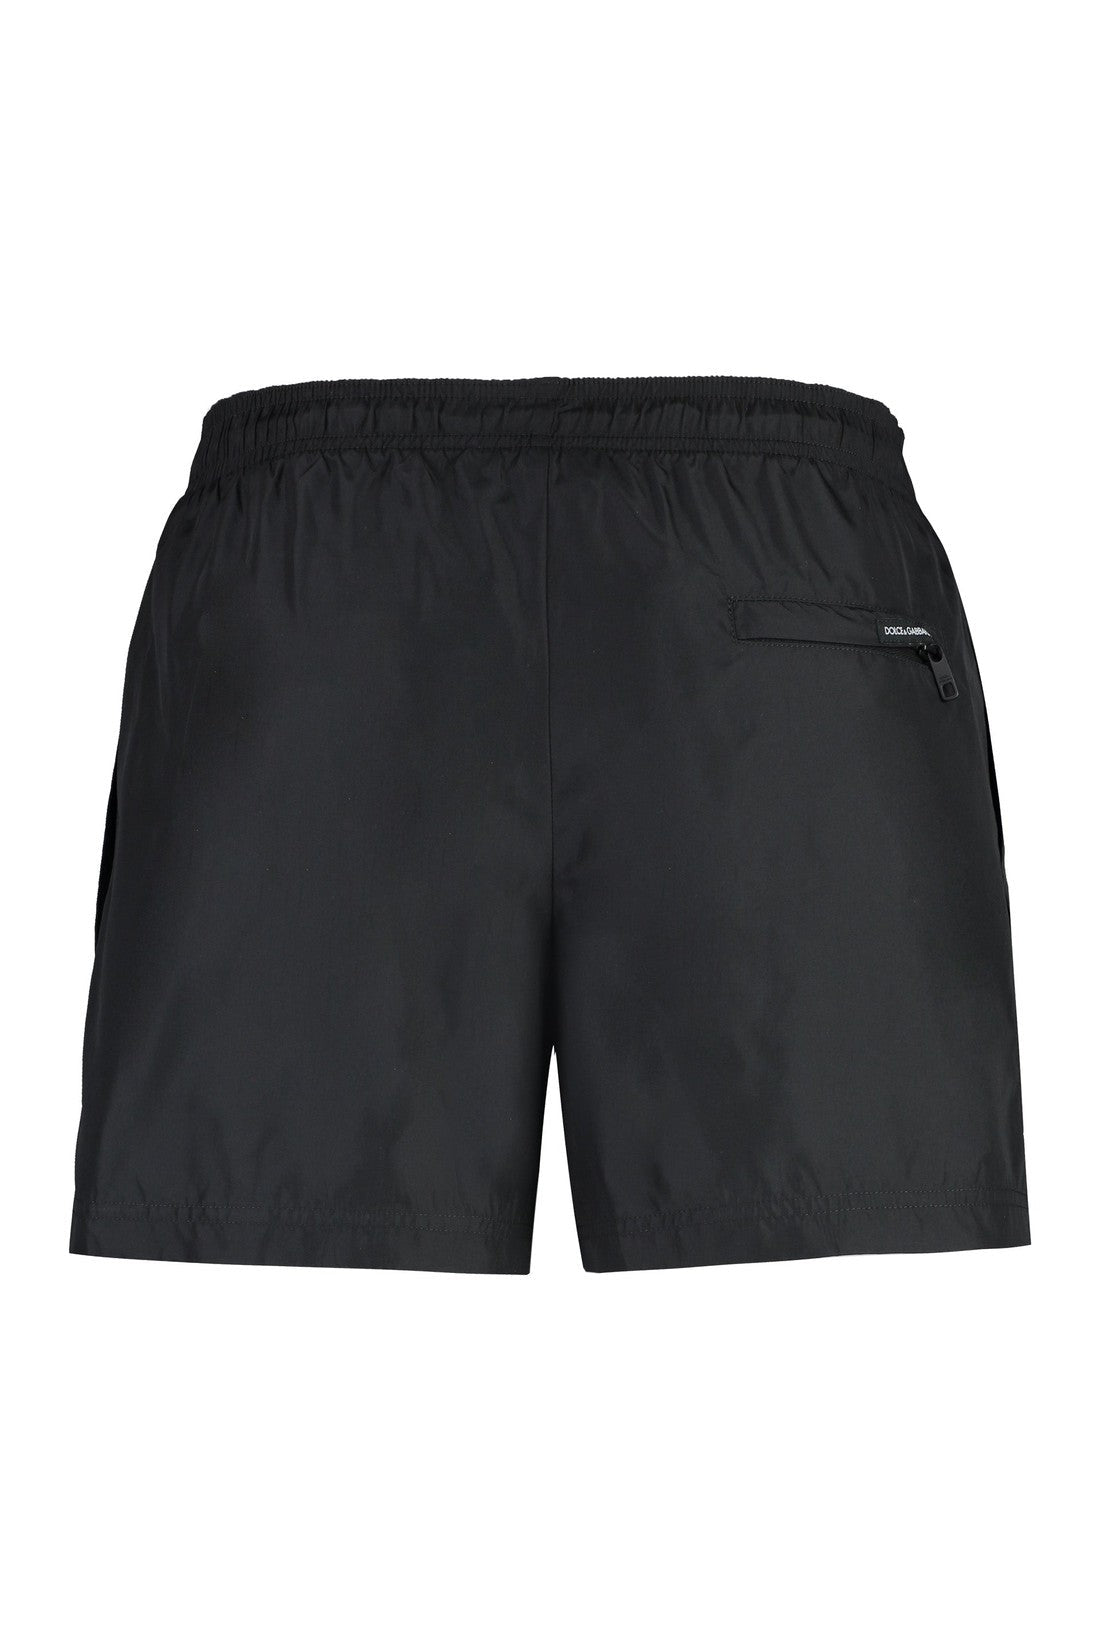 Dolce & Gabbana-OUTLET-SALE-Logo print swim shorts-ARCHIVIST